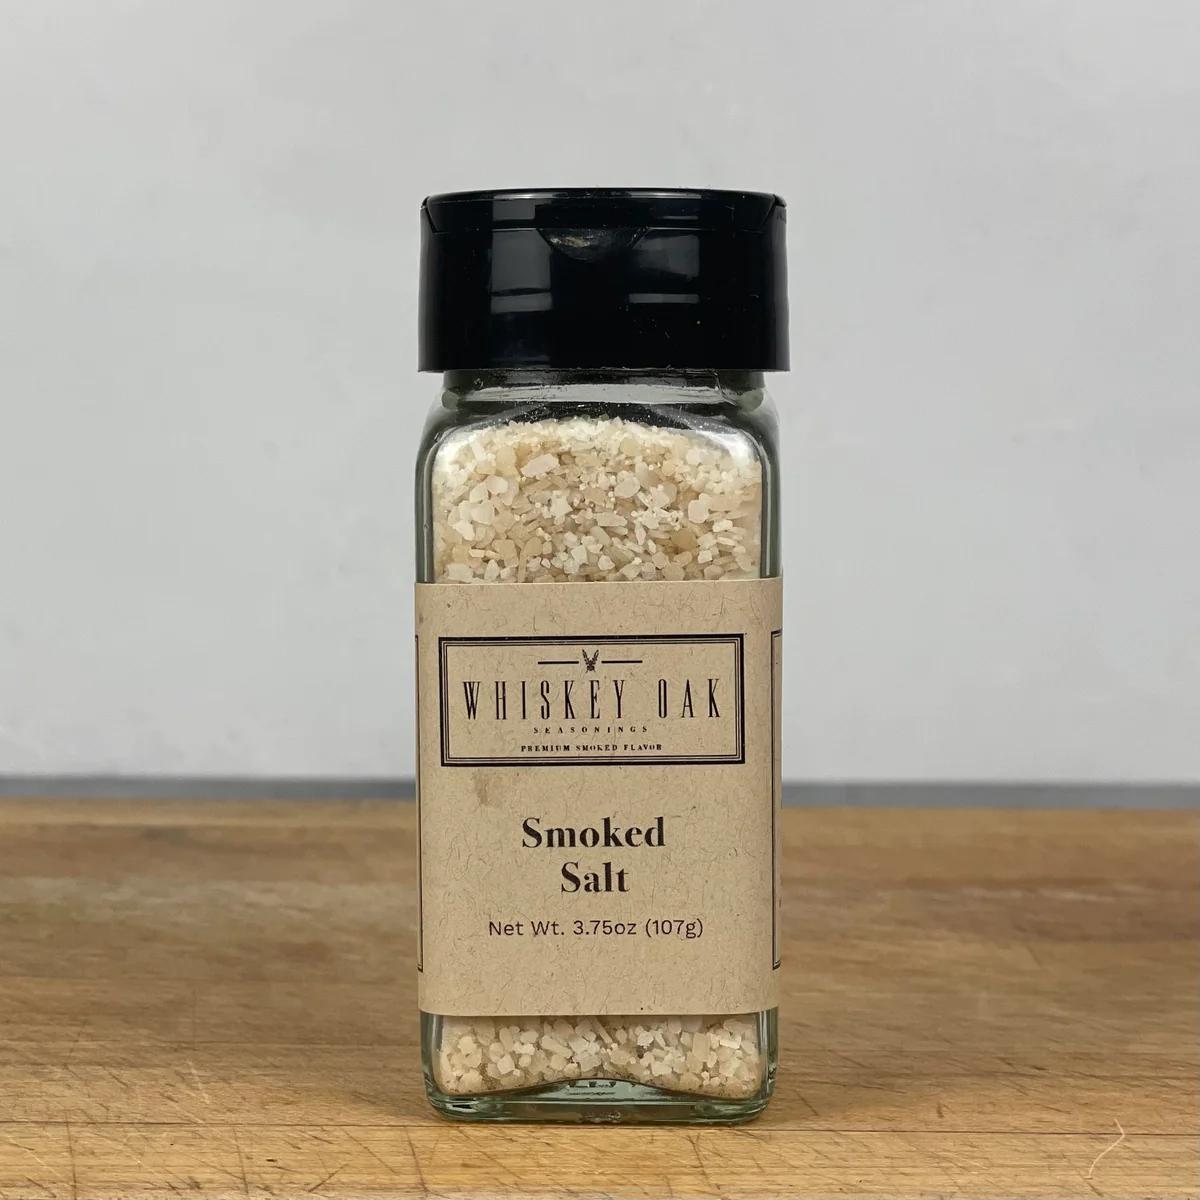 oak smoked salt - What do you do with smoked oak salt